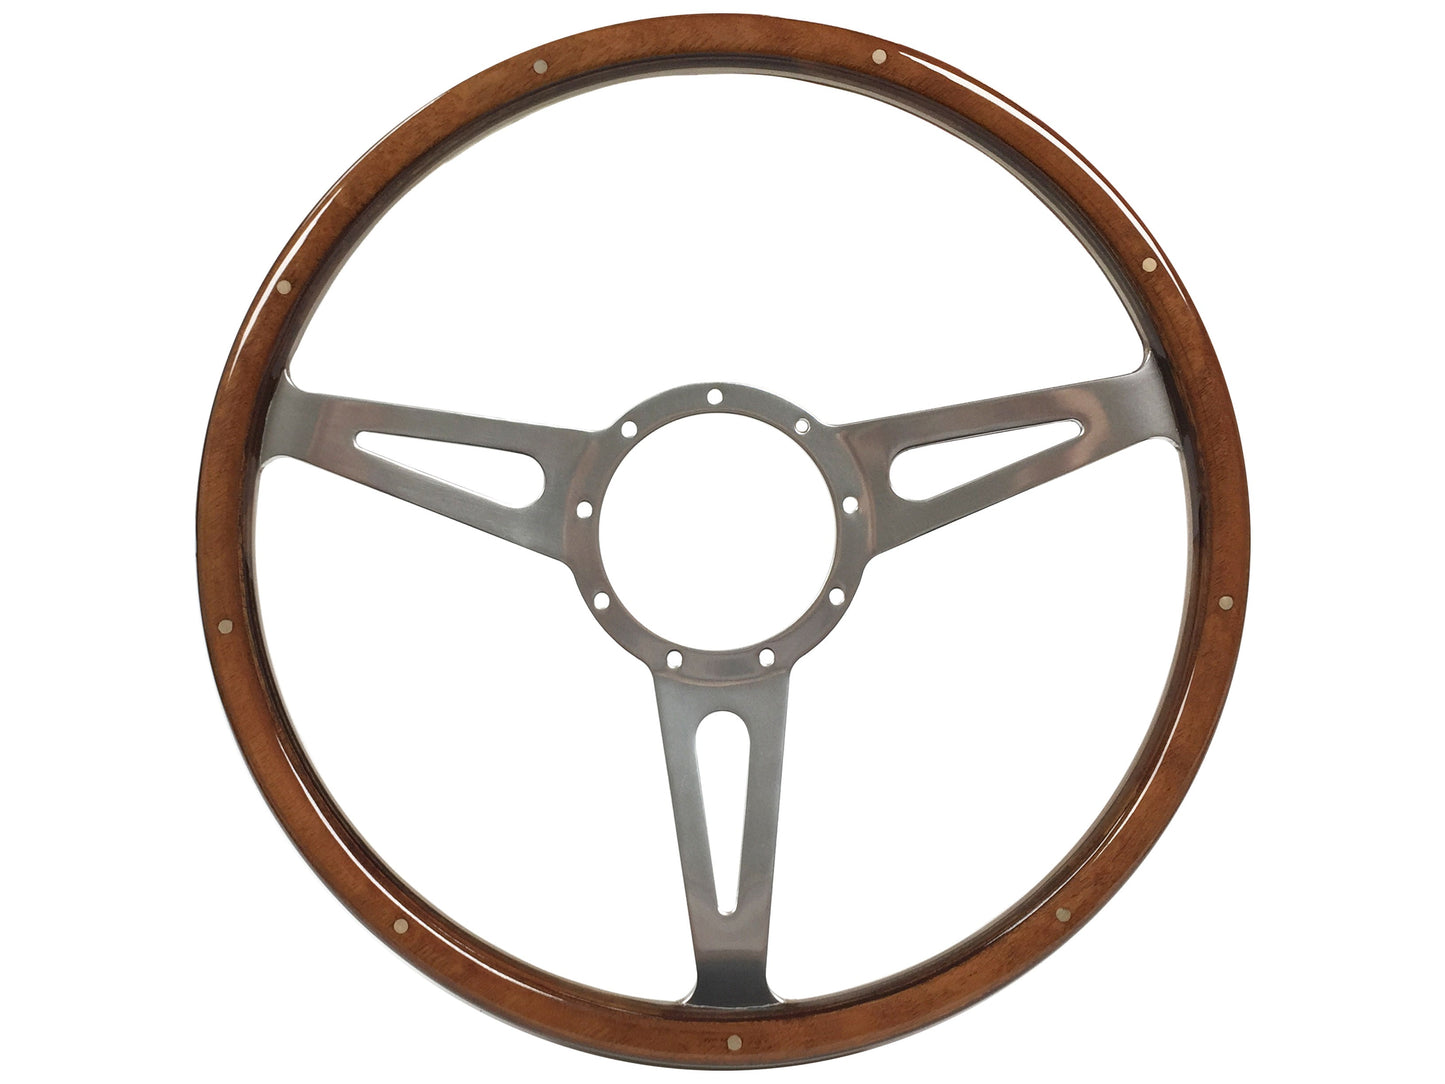 1970-76 Ford Torino Steering Wheel Kit | Deluxe Walnut Wood | ST3053